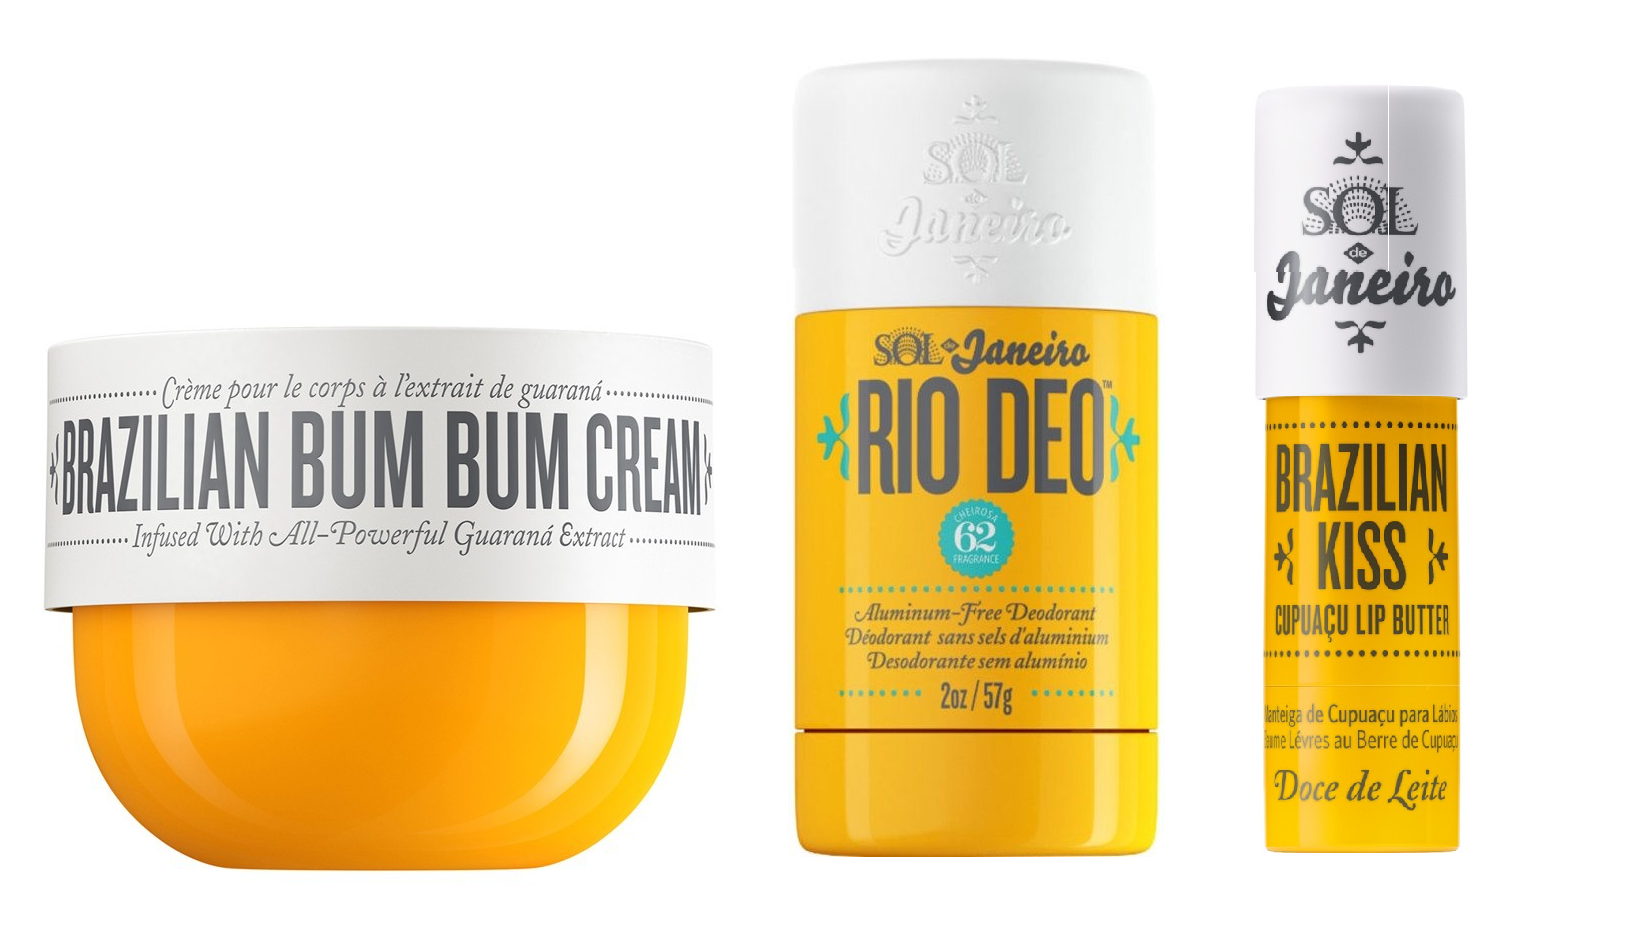 Sol de Janeiro - Brazilian Bum Bum creme 240 ml + Rio Deo Aluminum-Free Deodorant 57 g + Lip Butter